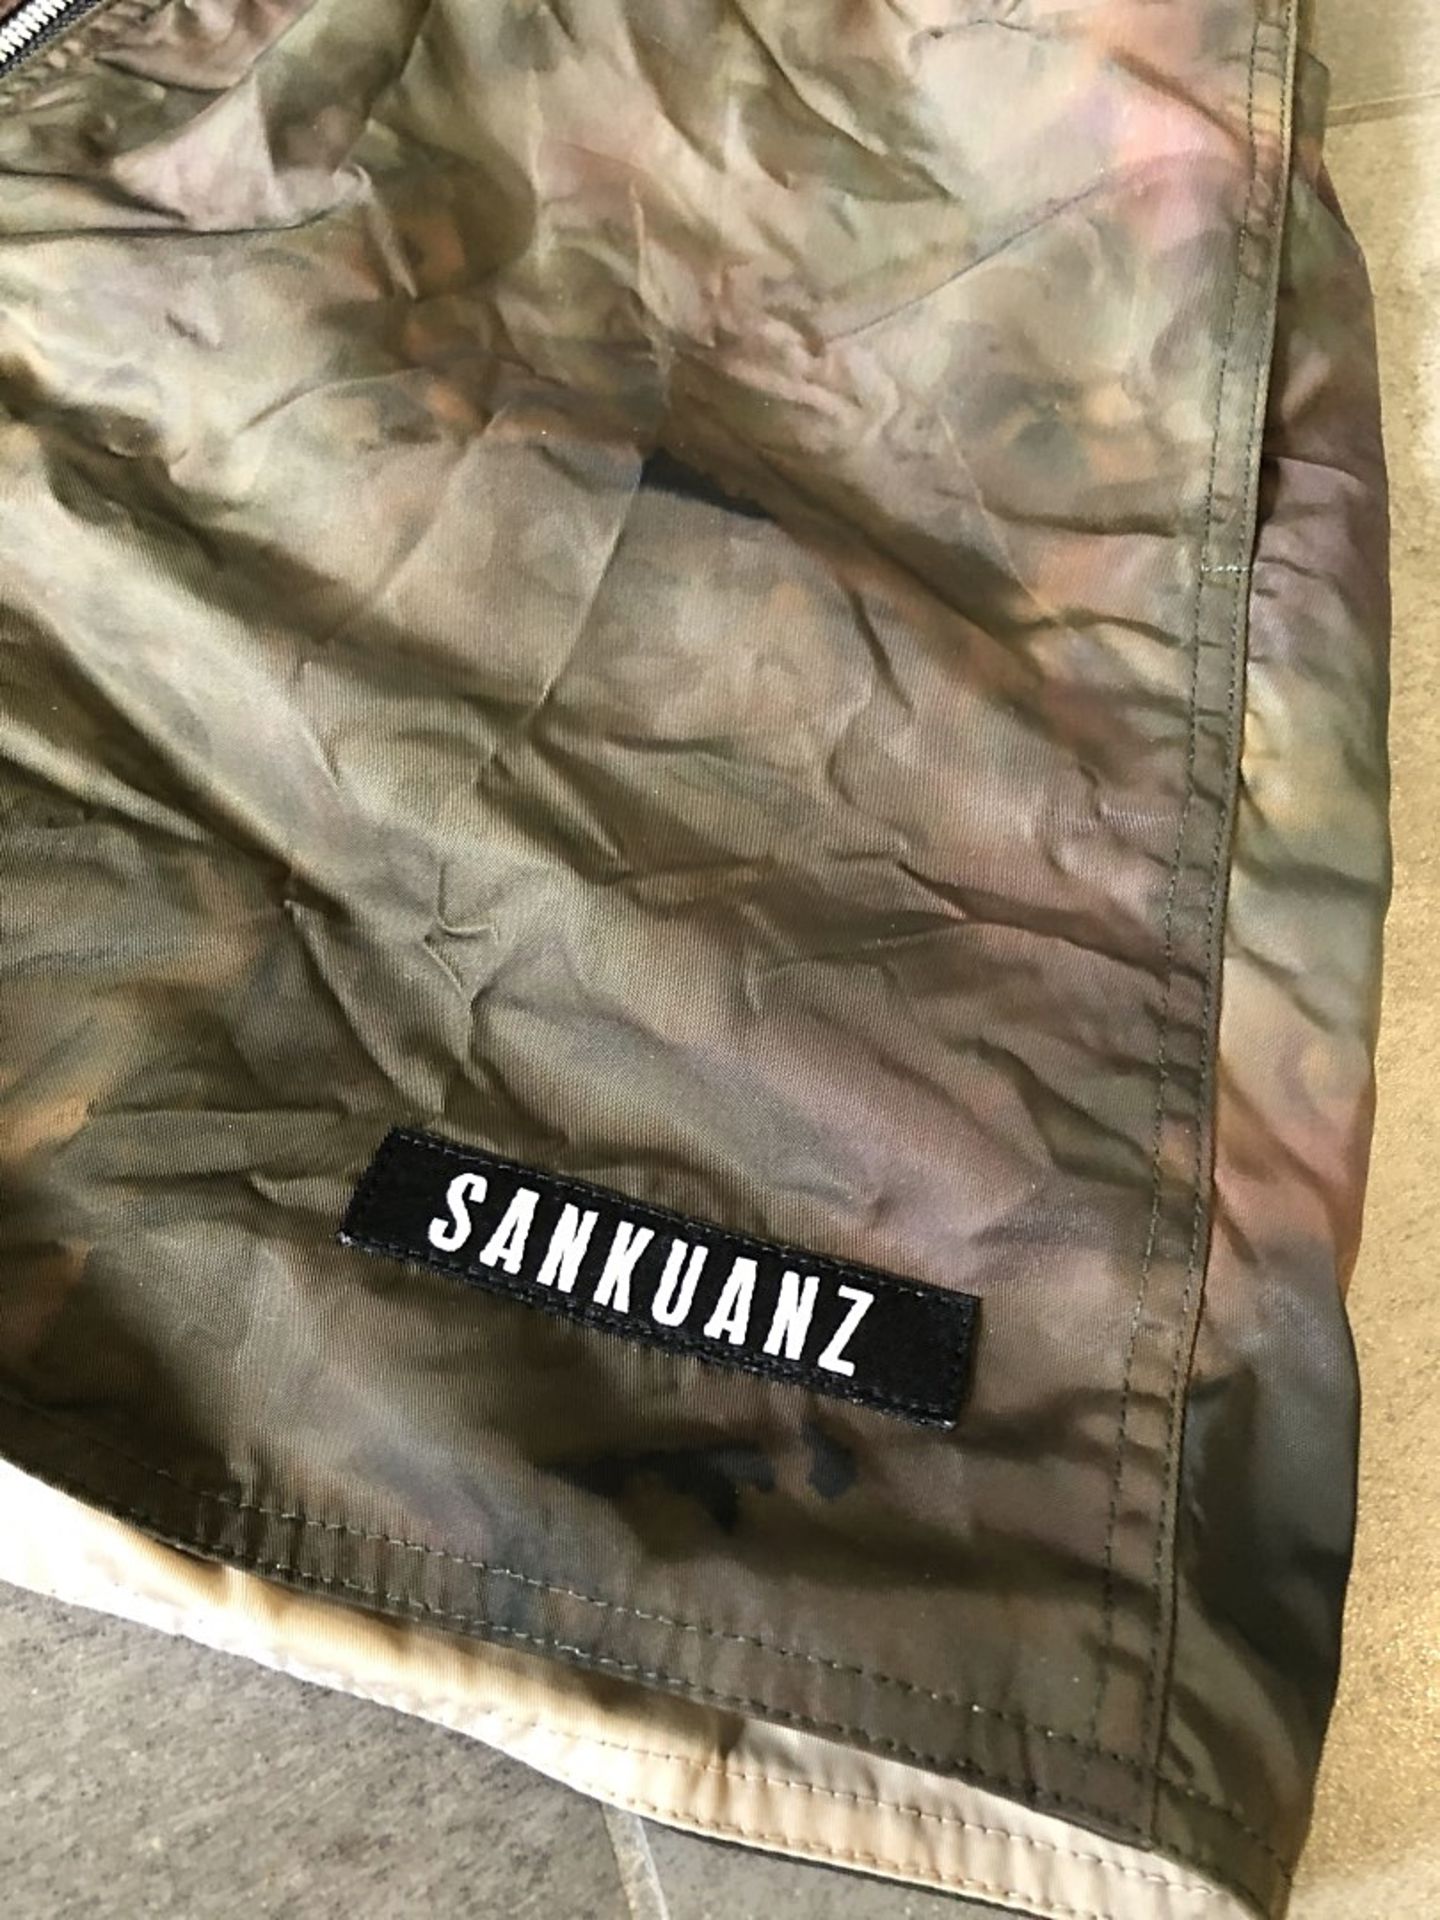 1 x Pair Of Men's Genuine Sankuaz Reversible Camo Shorts - Colour: Green / Cream - Image 3 of 6